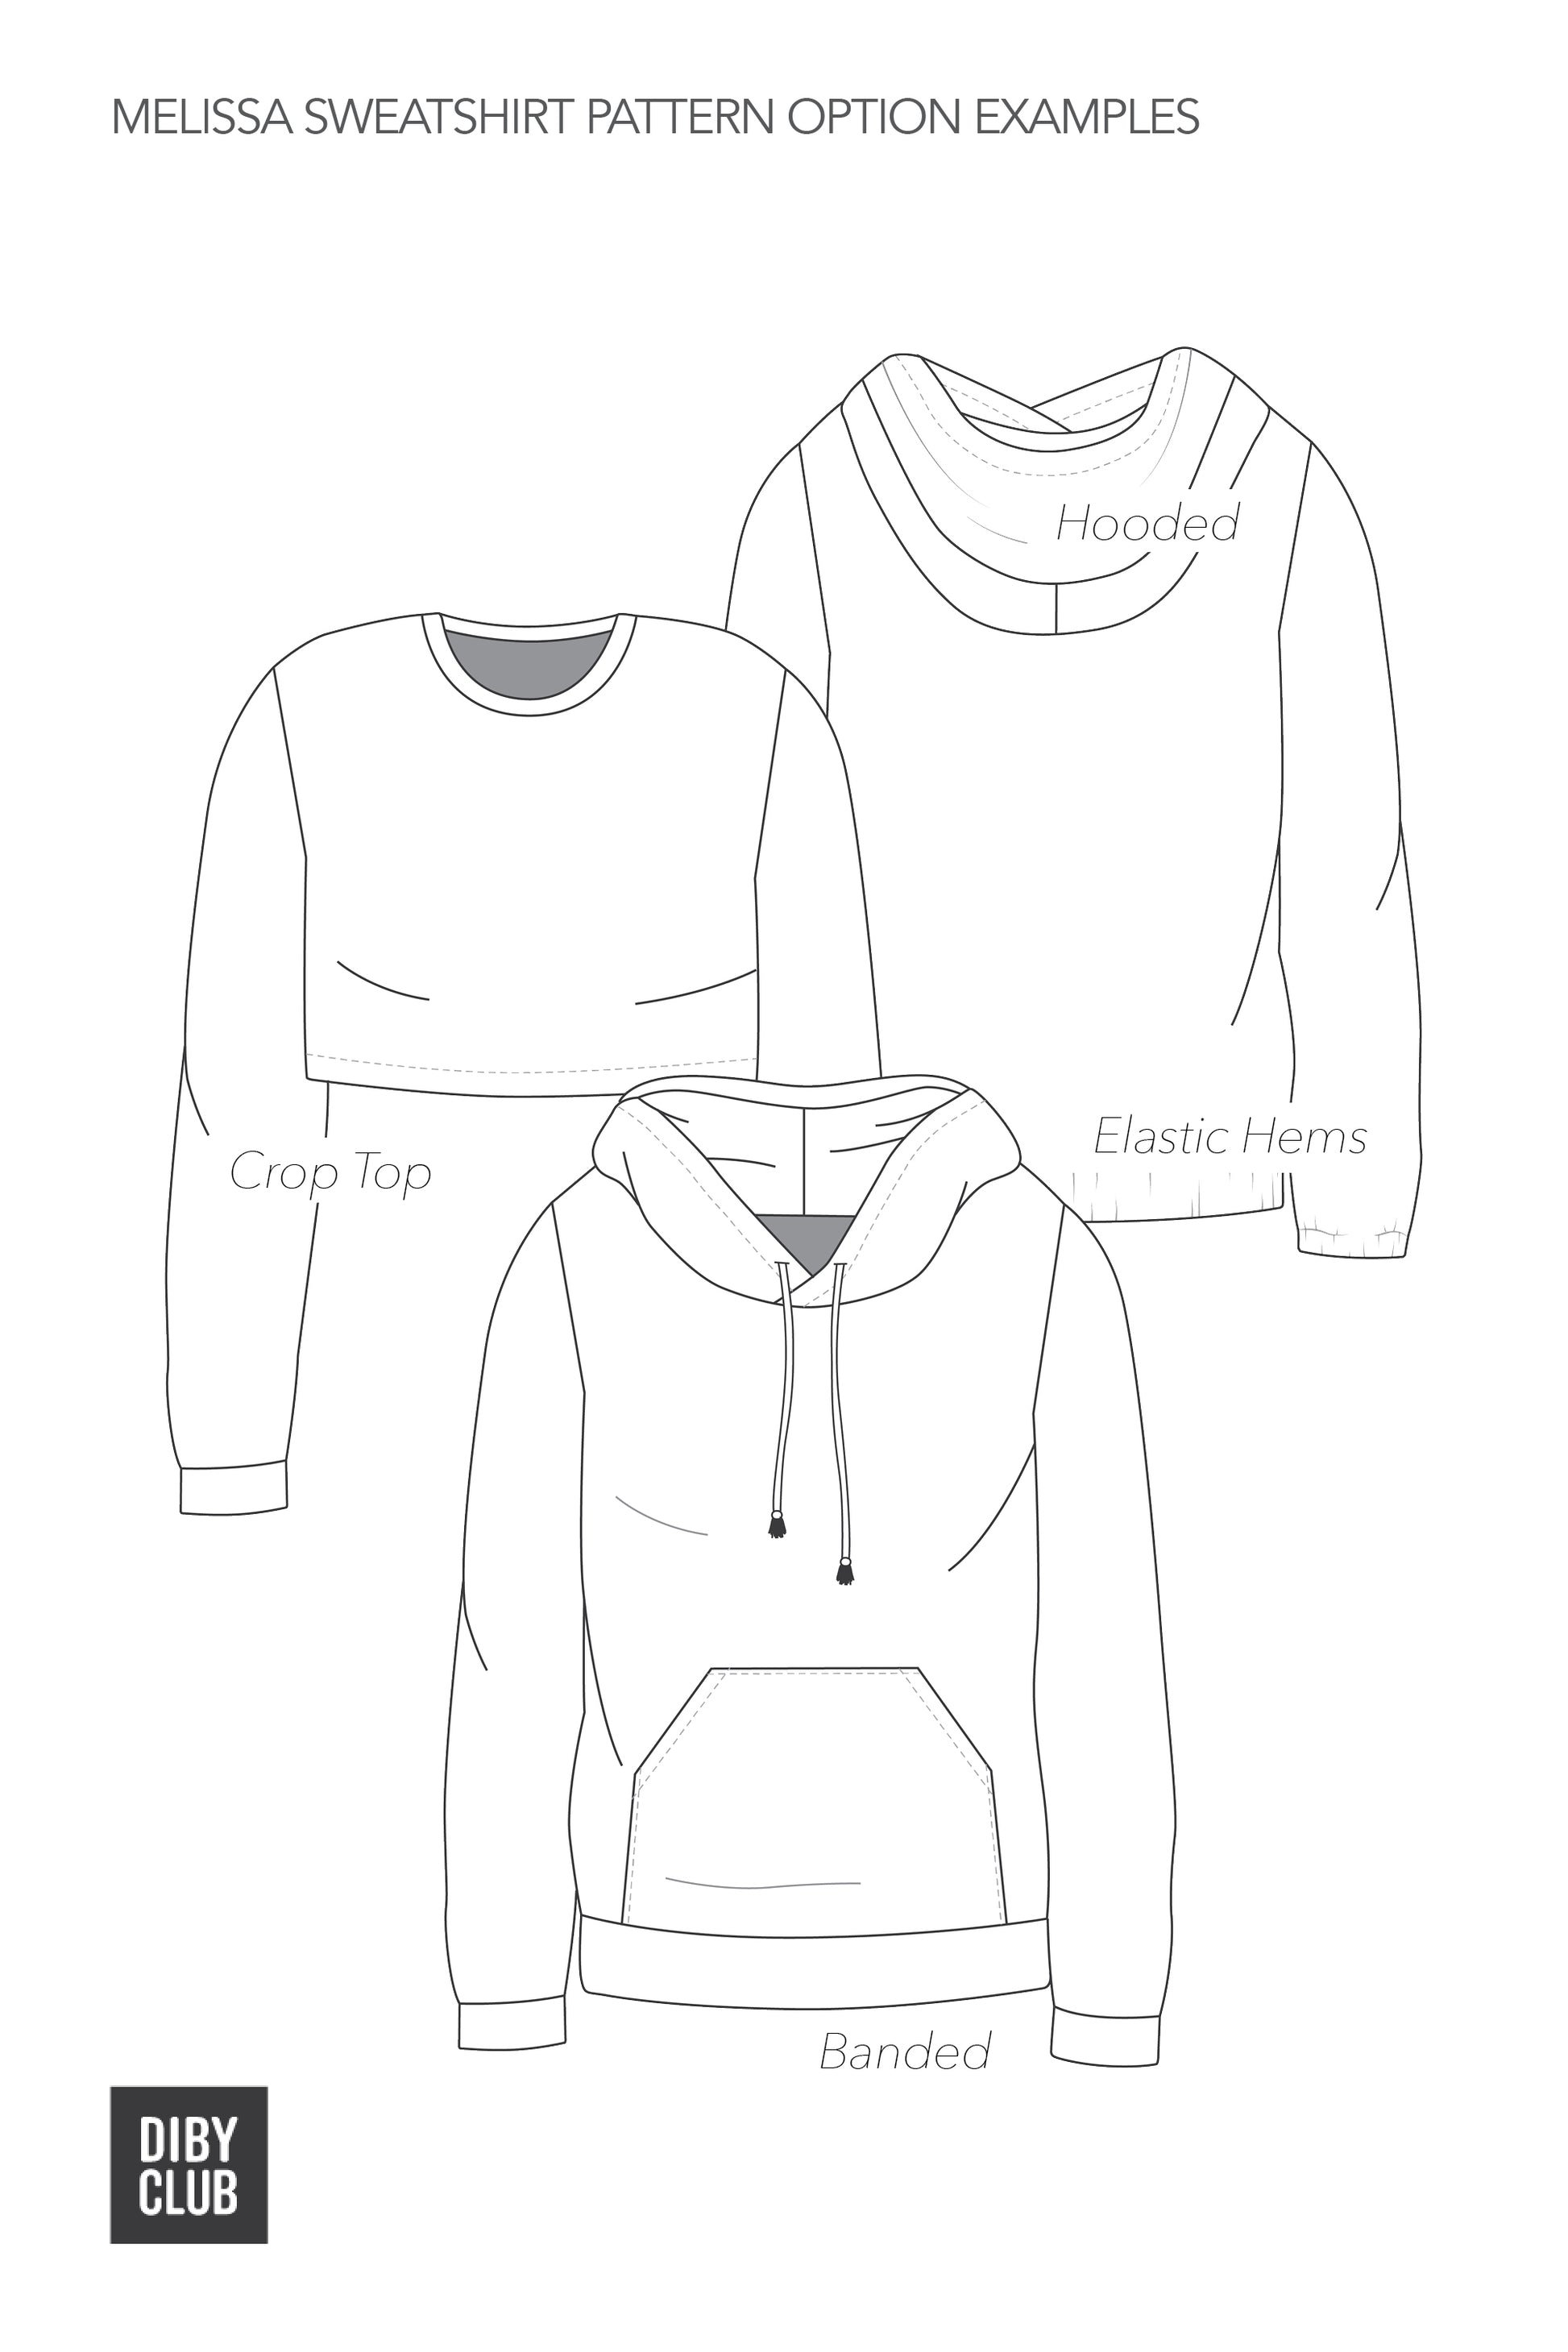 The Melissa Sweatshirt Pattern Options. 